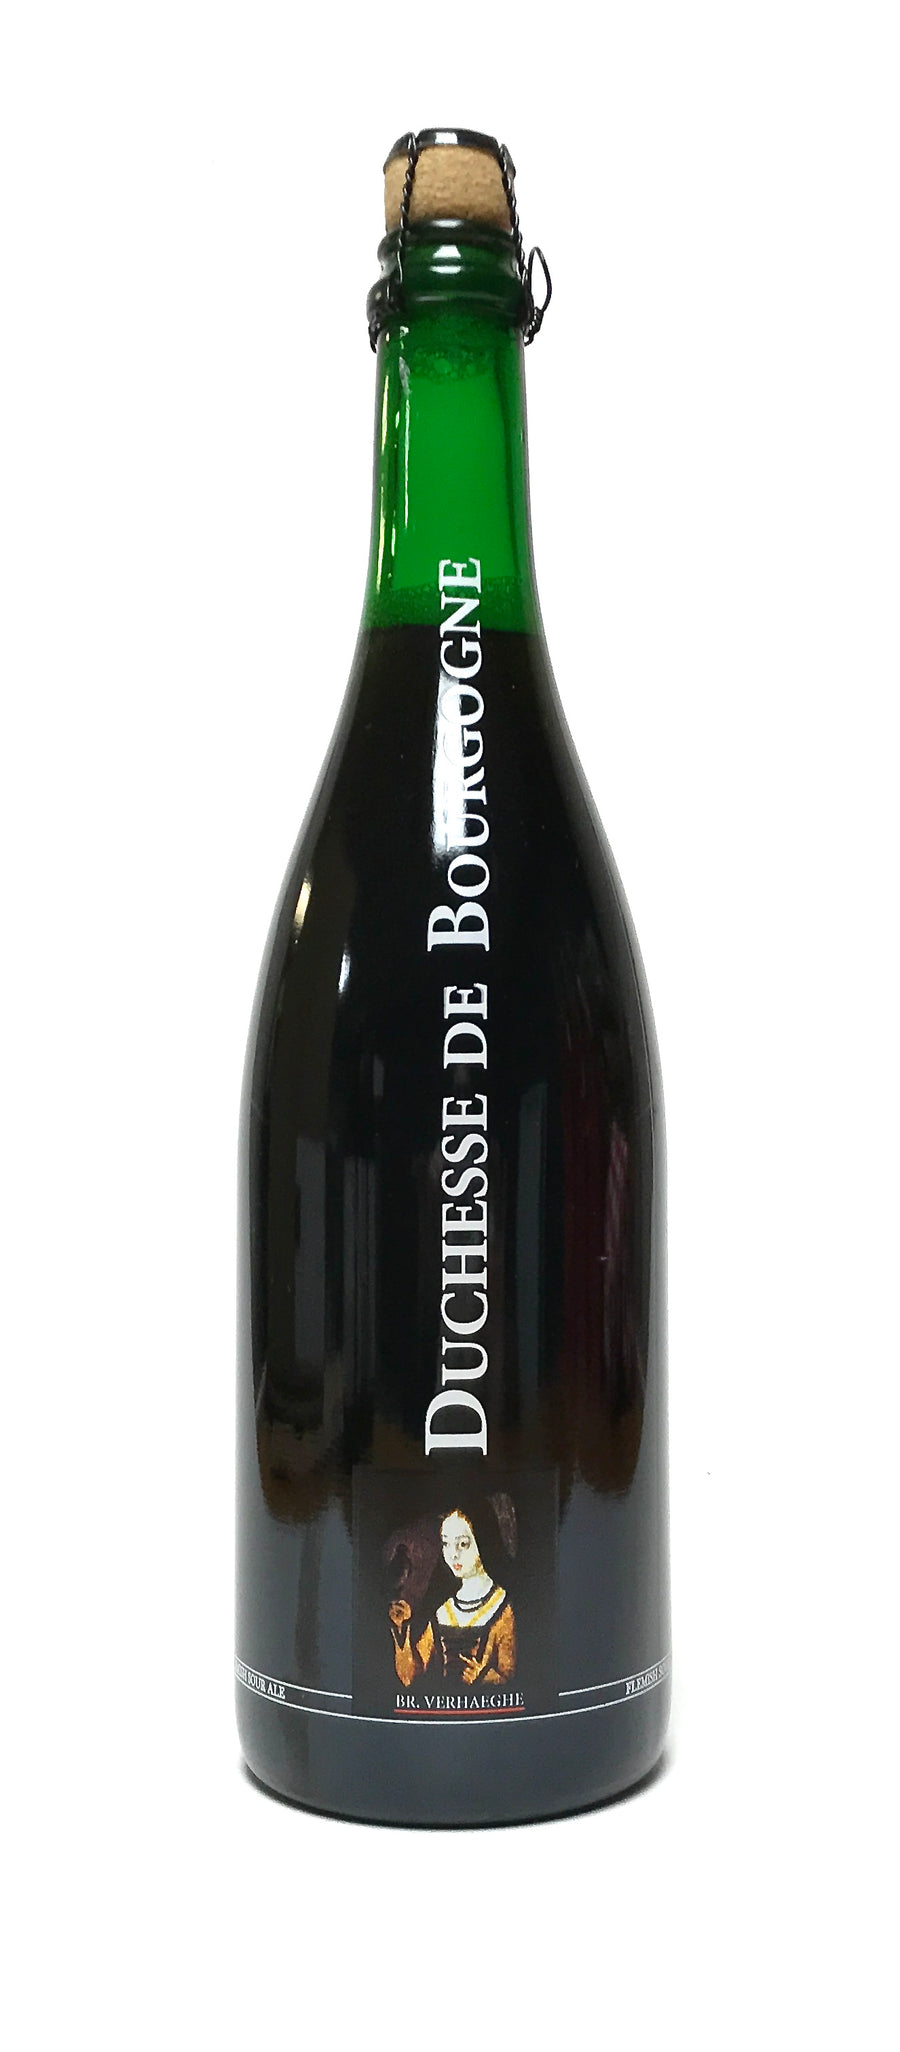 Verhaeghe Duchesse de Bourgogne Sour Ale 750ml Bottle